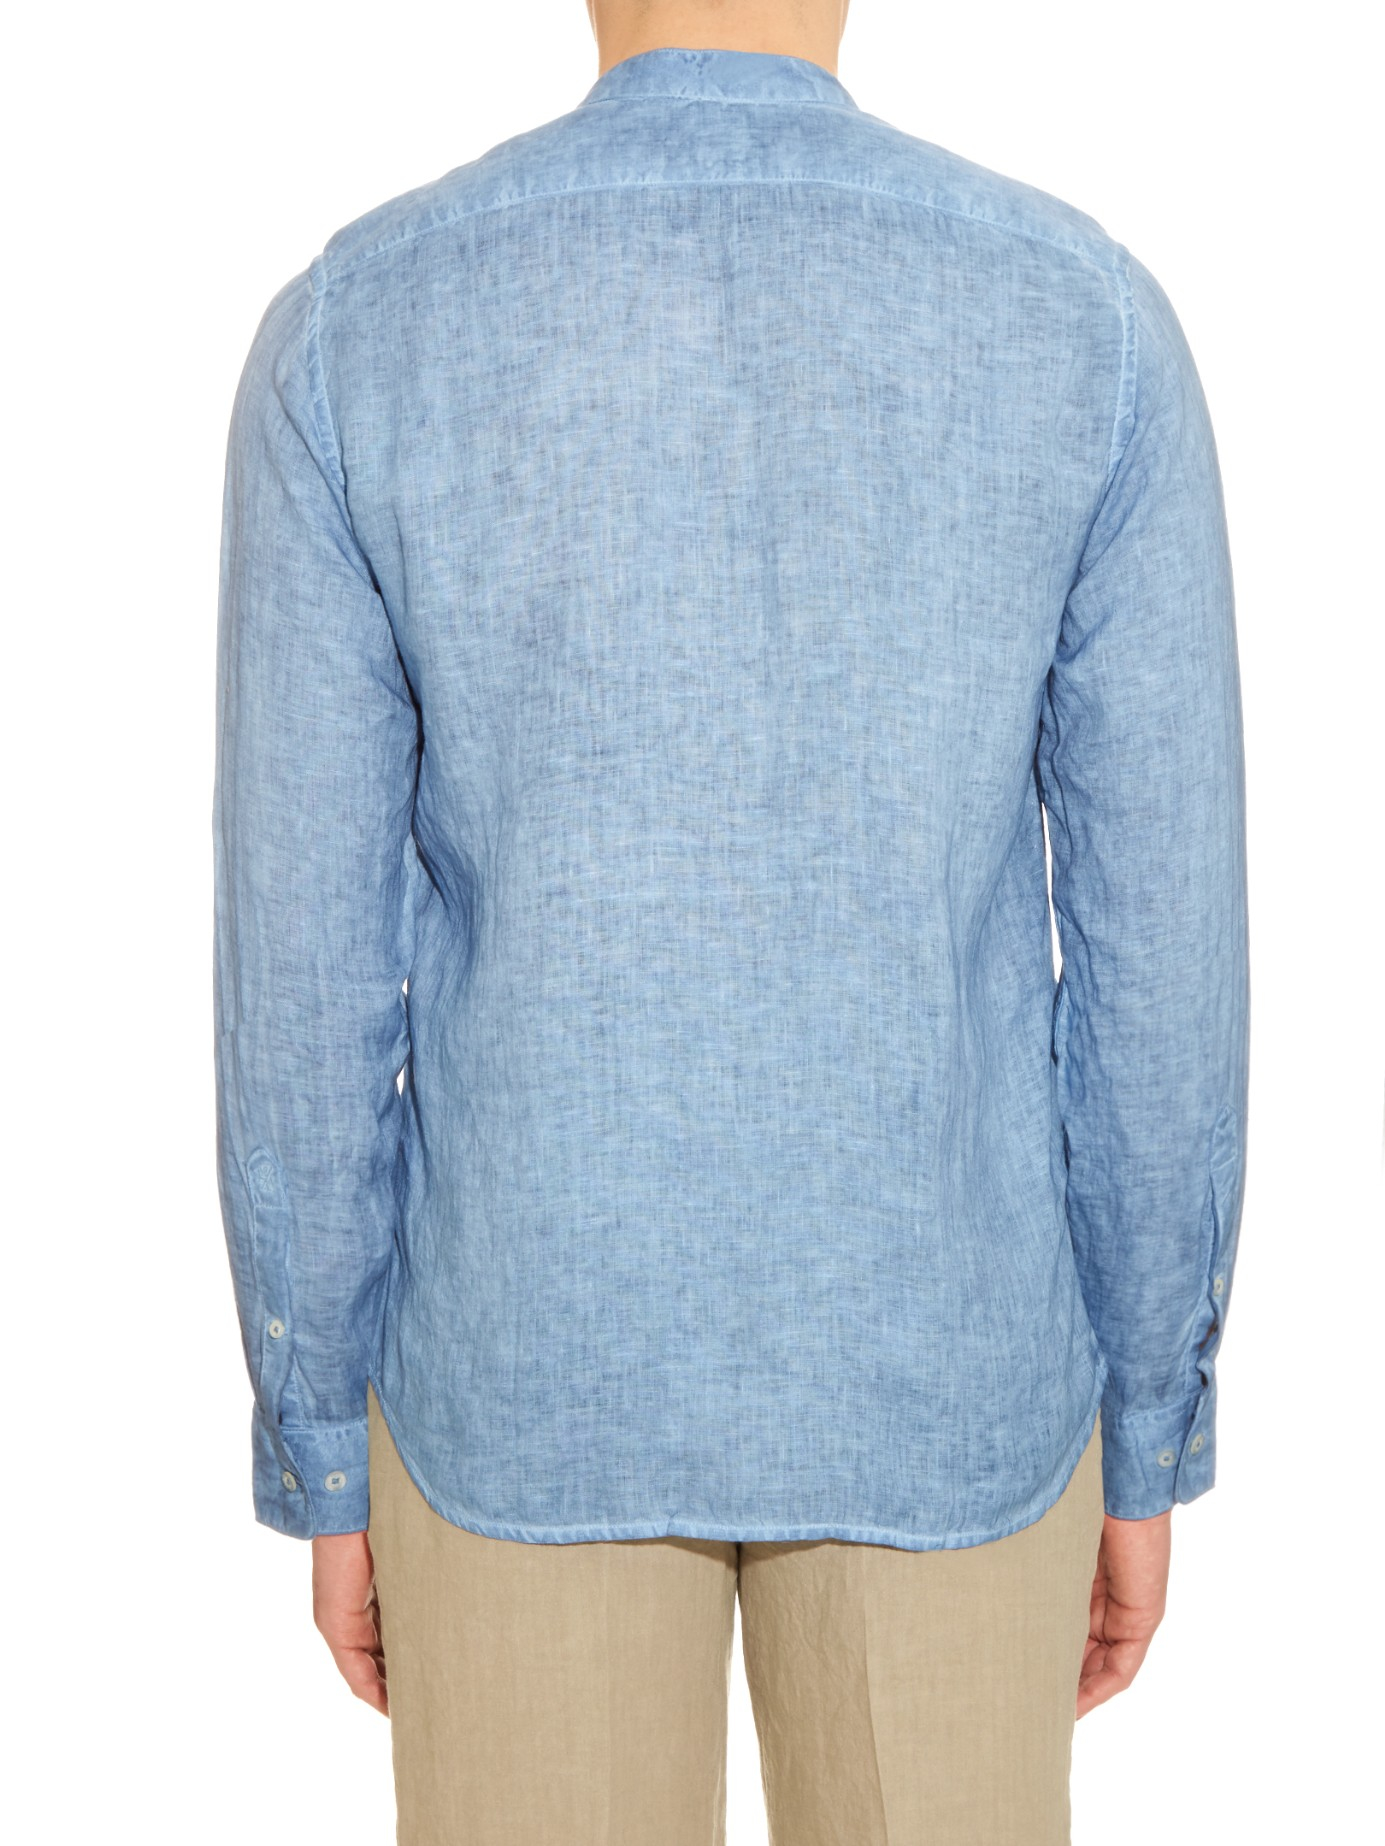 Lyst - 120% Lino Collarless Linen Shirt in Blue for Men